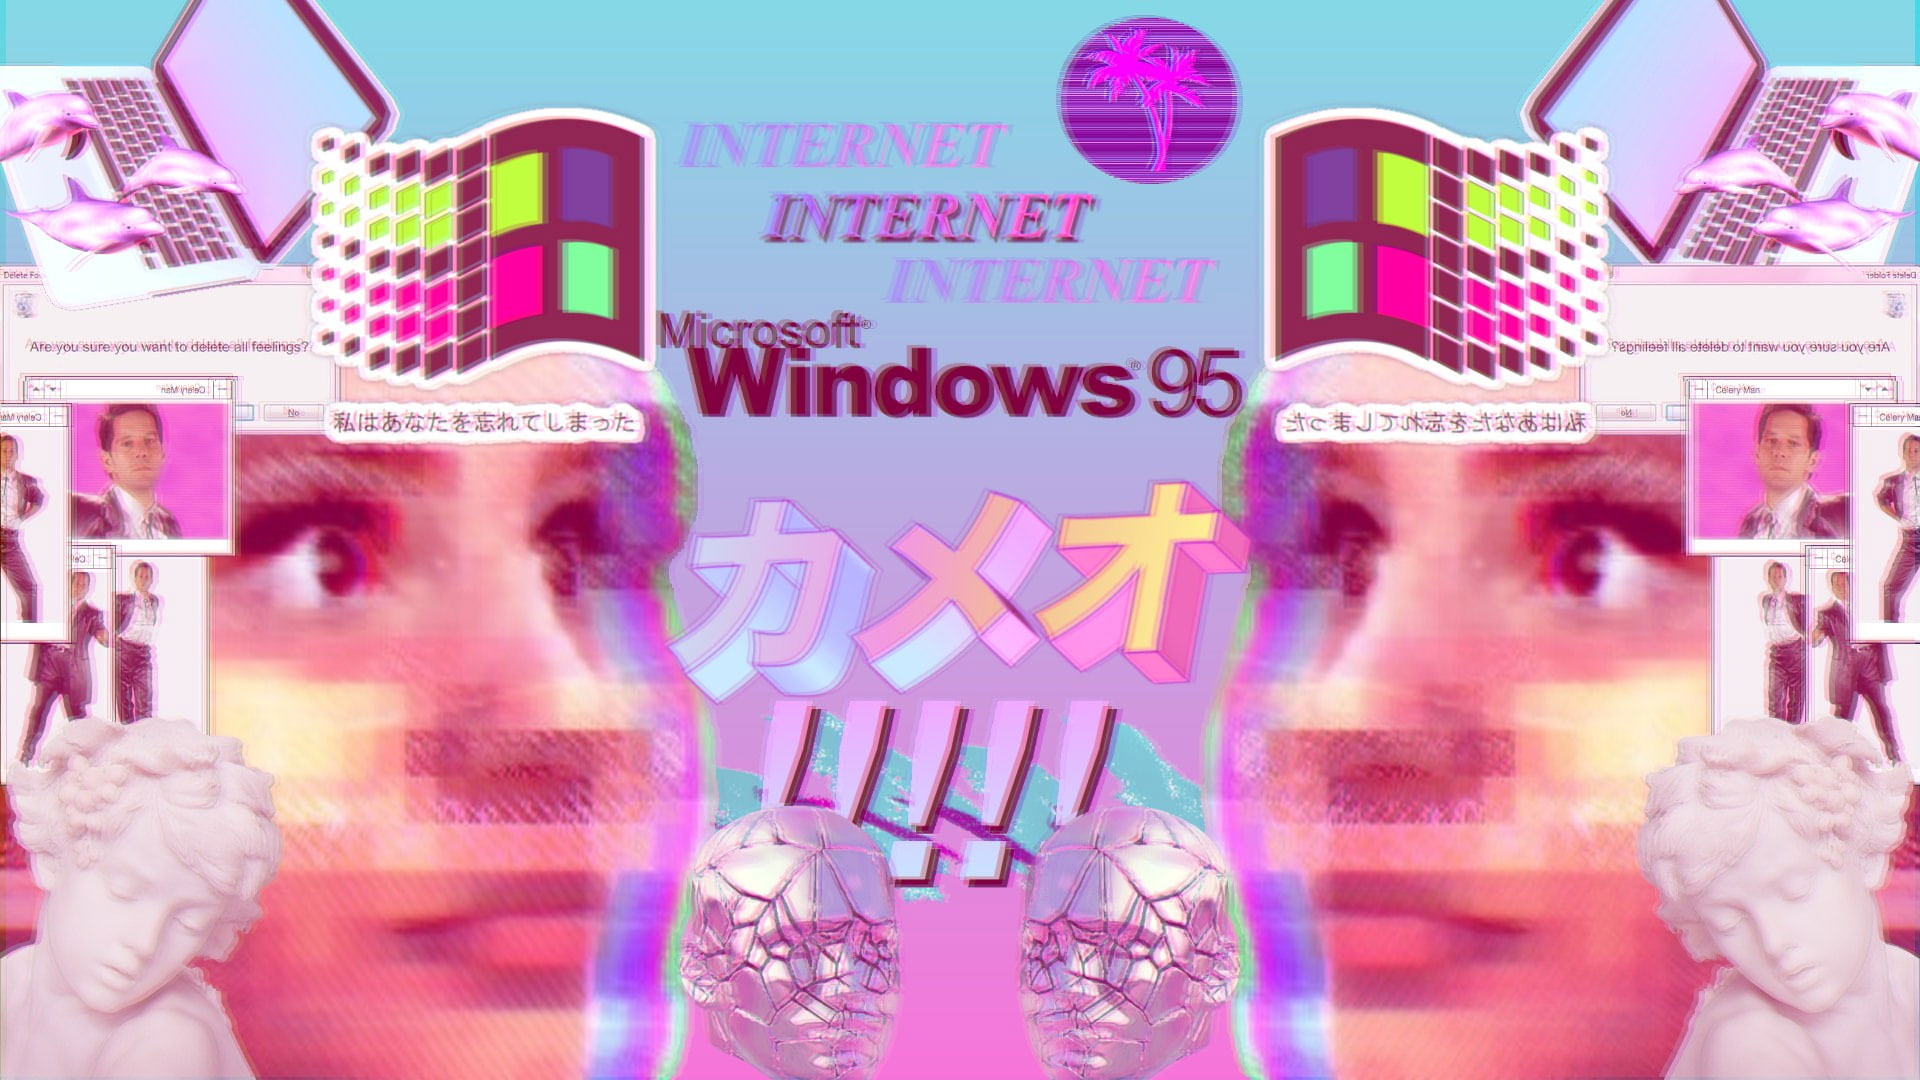 Windows 95 wallpaper, glitch art, vaporwave